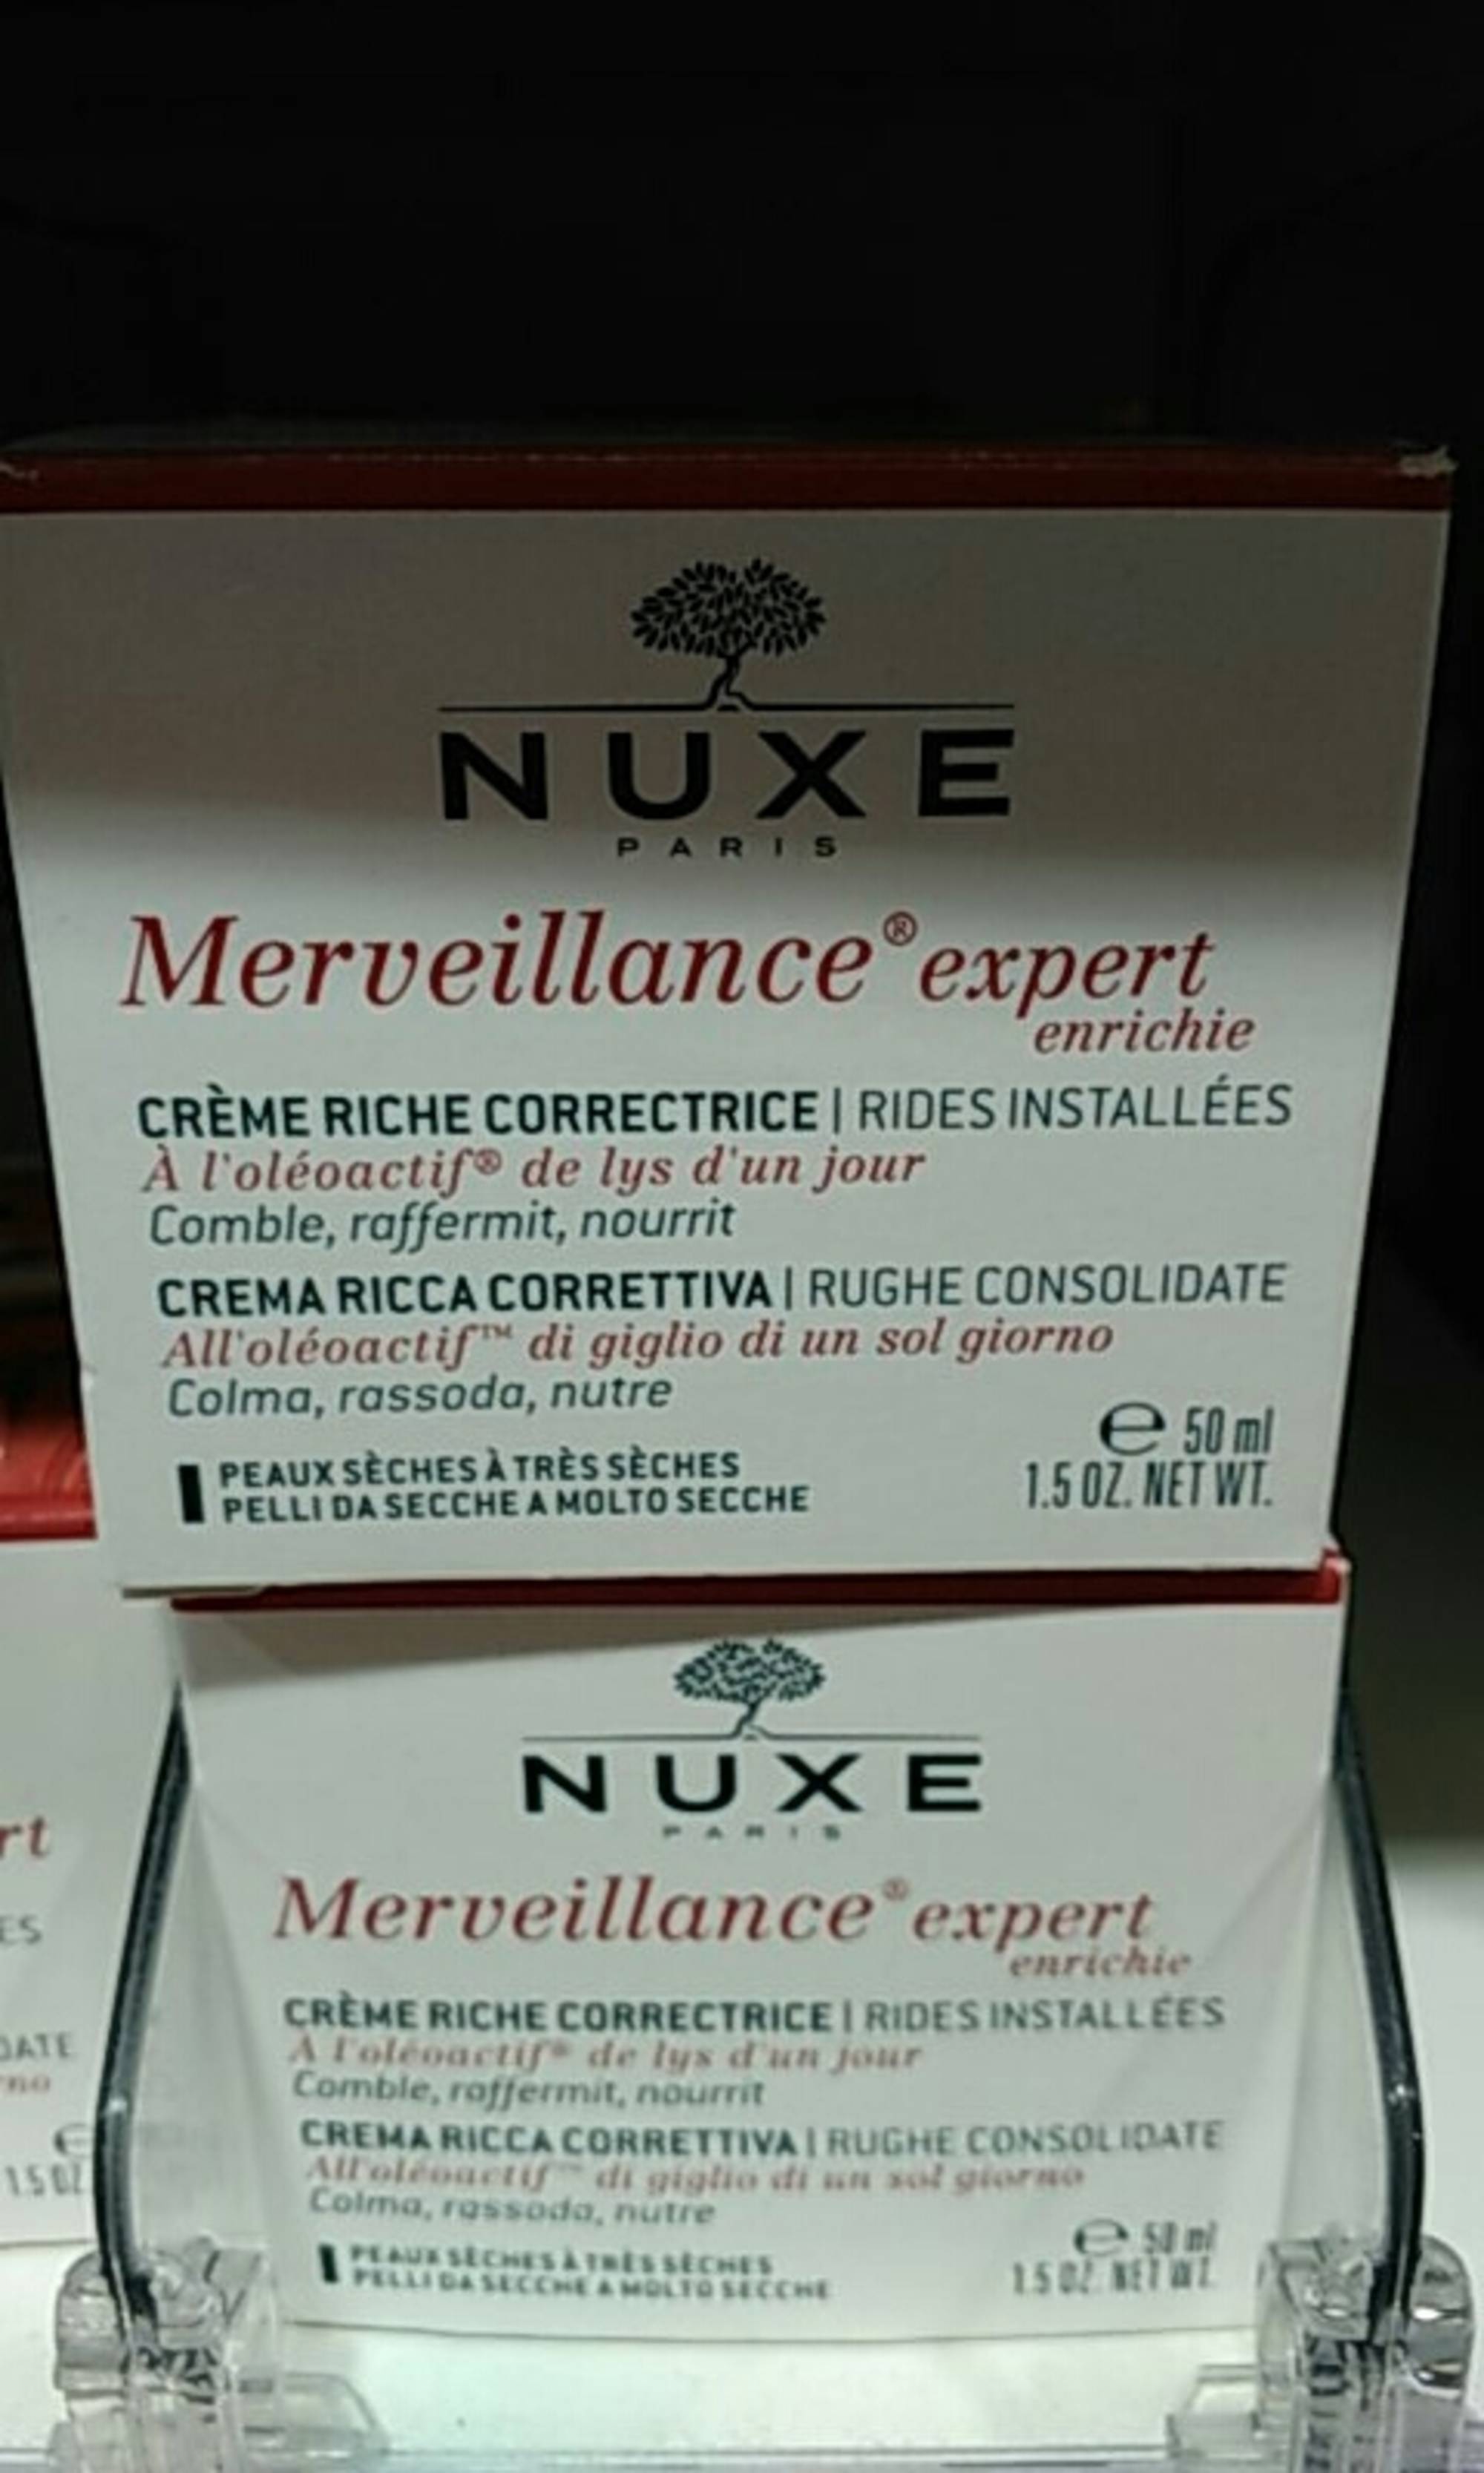 NUXE - Merveillance expert enrichie - Crème riche correctrice